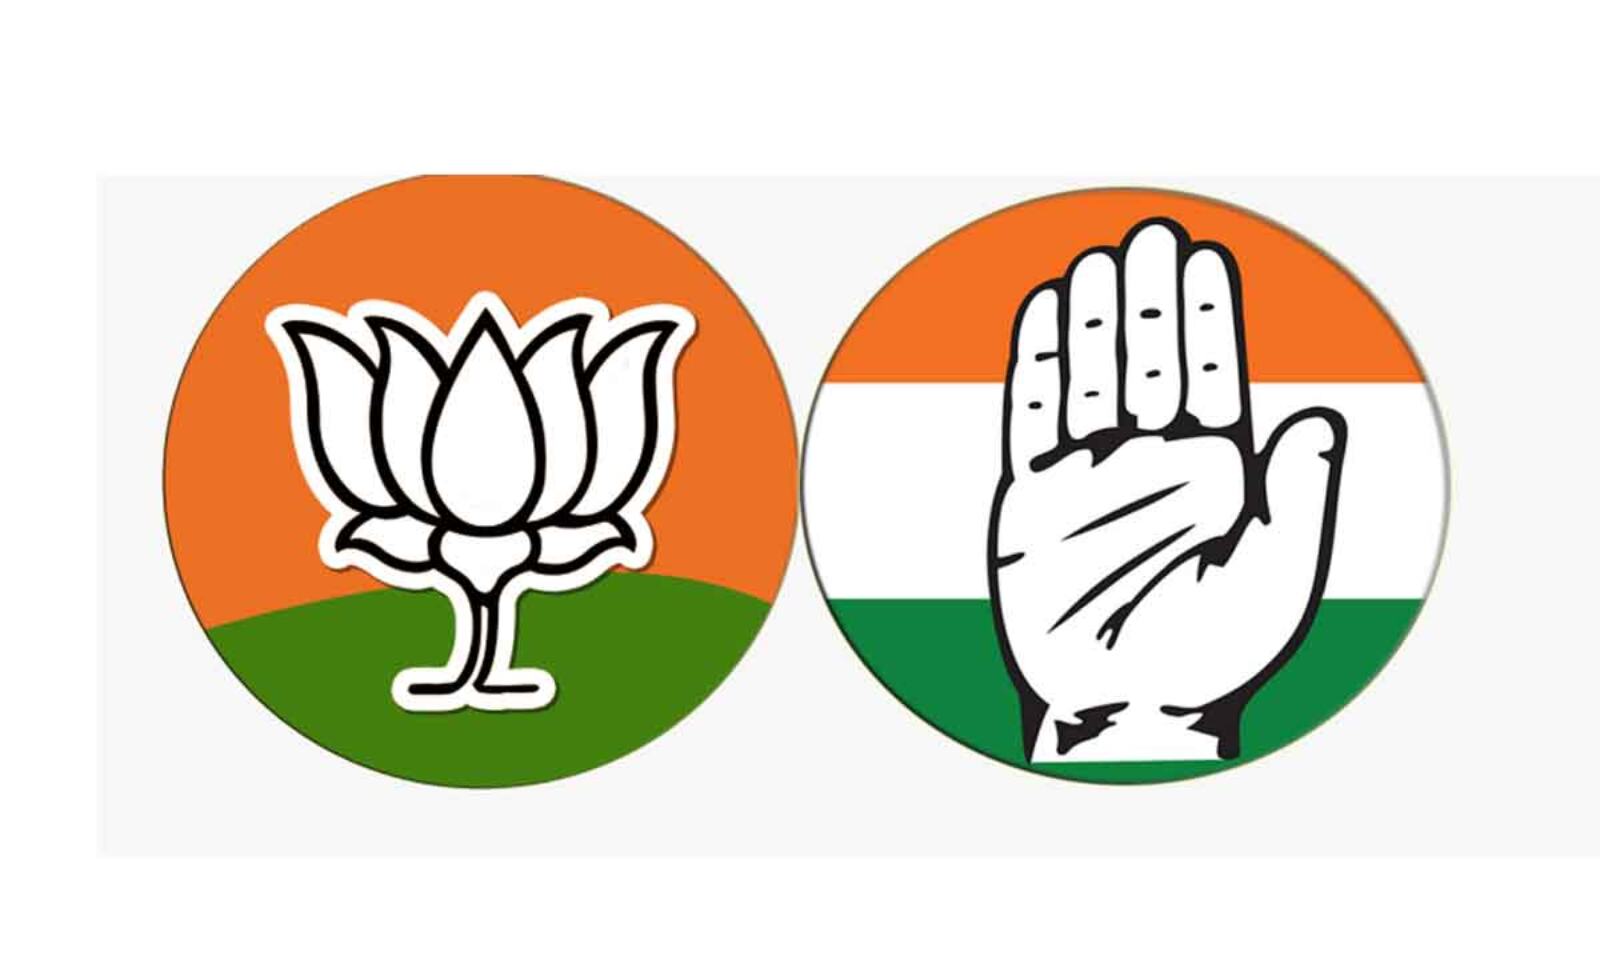 BJP logo animation 4 : laurel media productions - YouTube